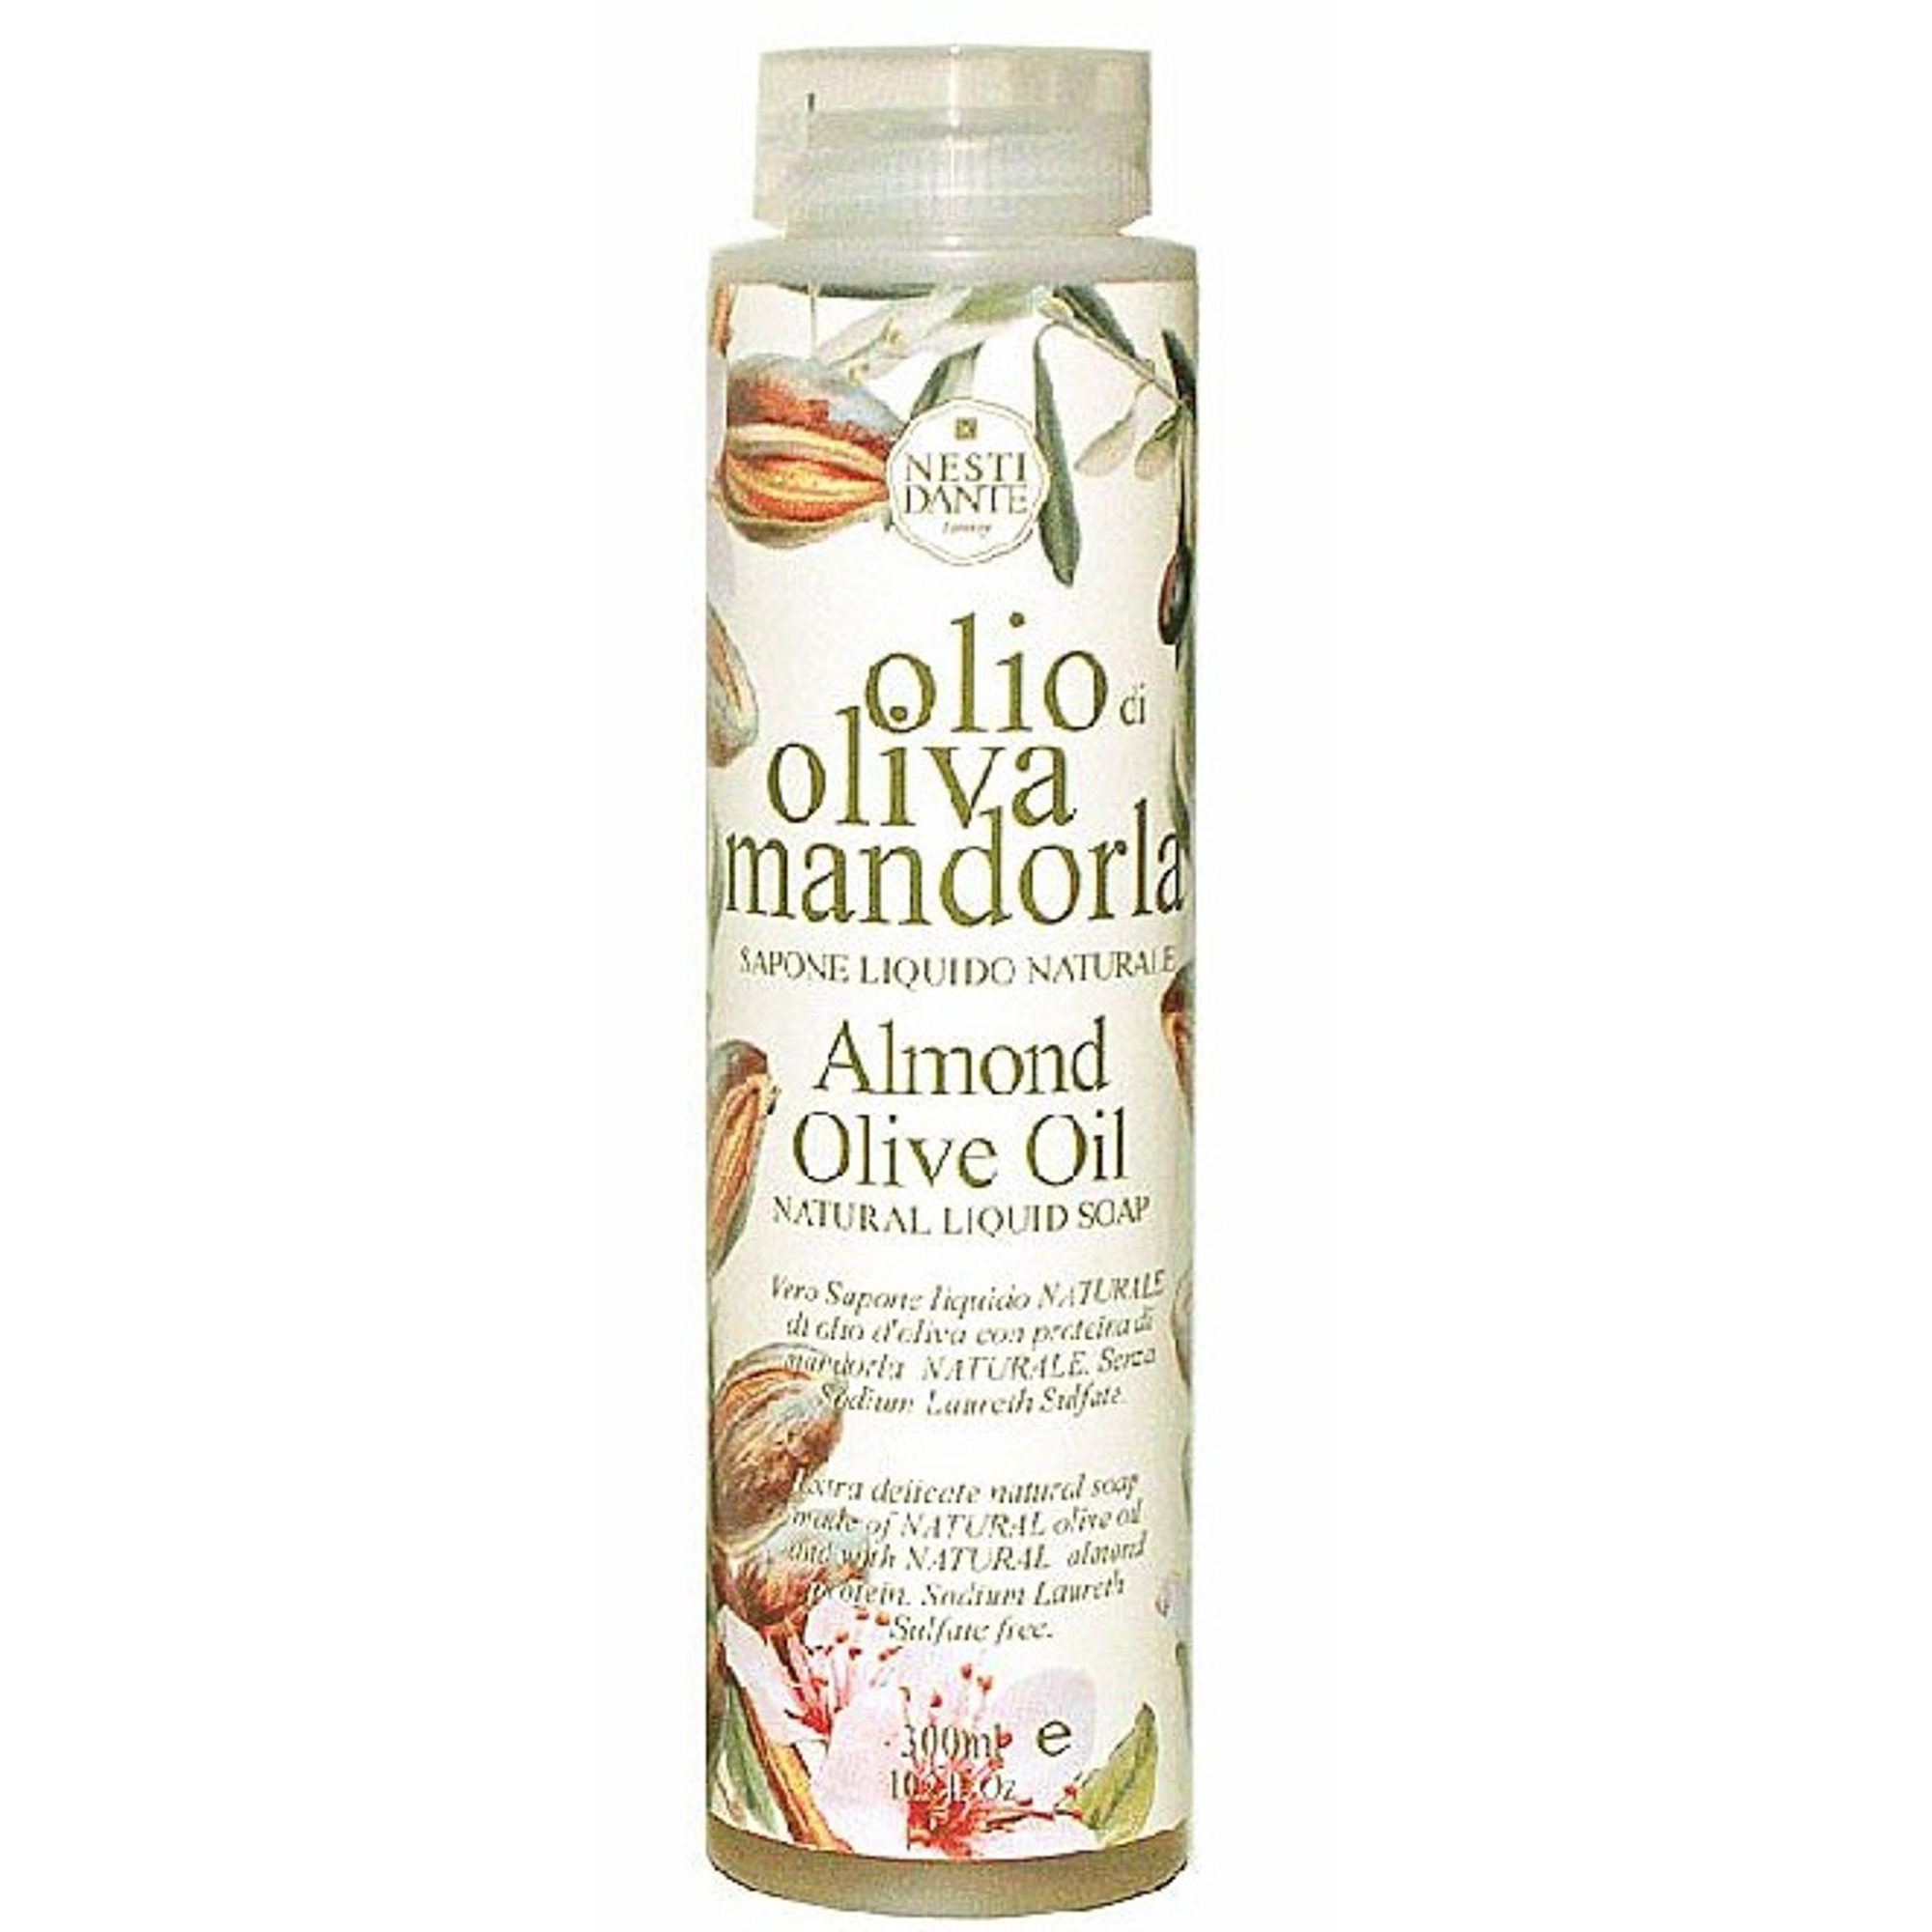 Гель для душа оливковое масло/мандарин 300мл Nesti dante гель для душа витаминный заряд 200мл